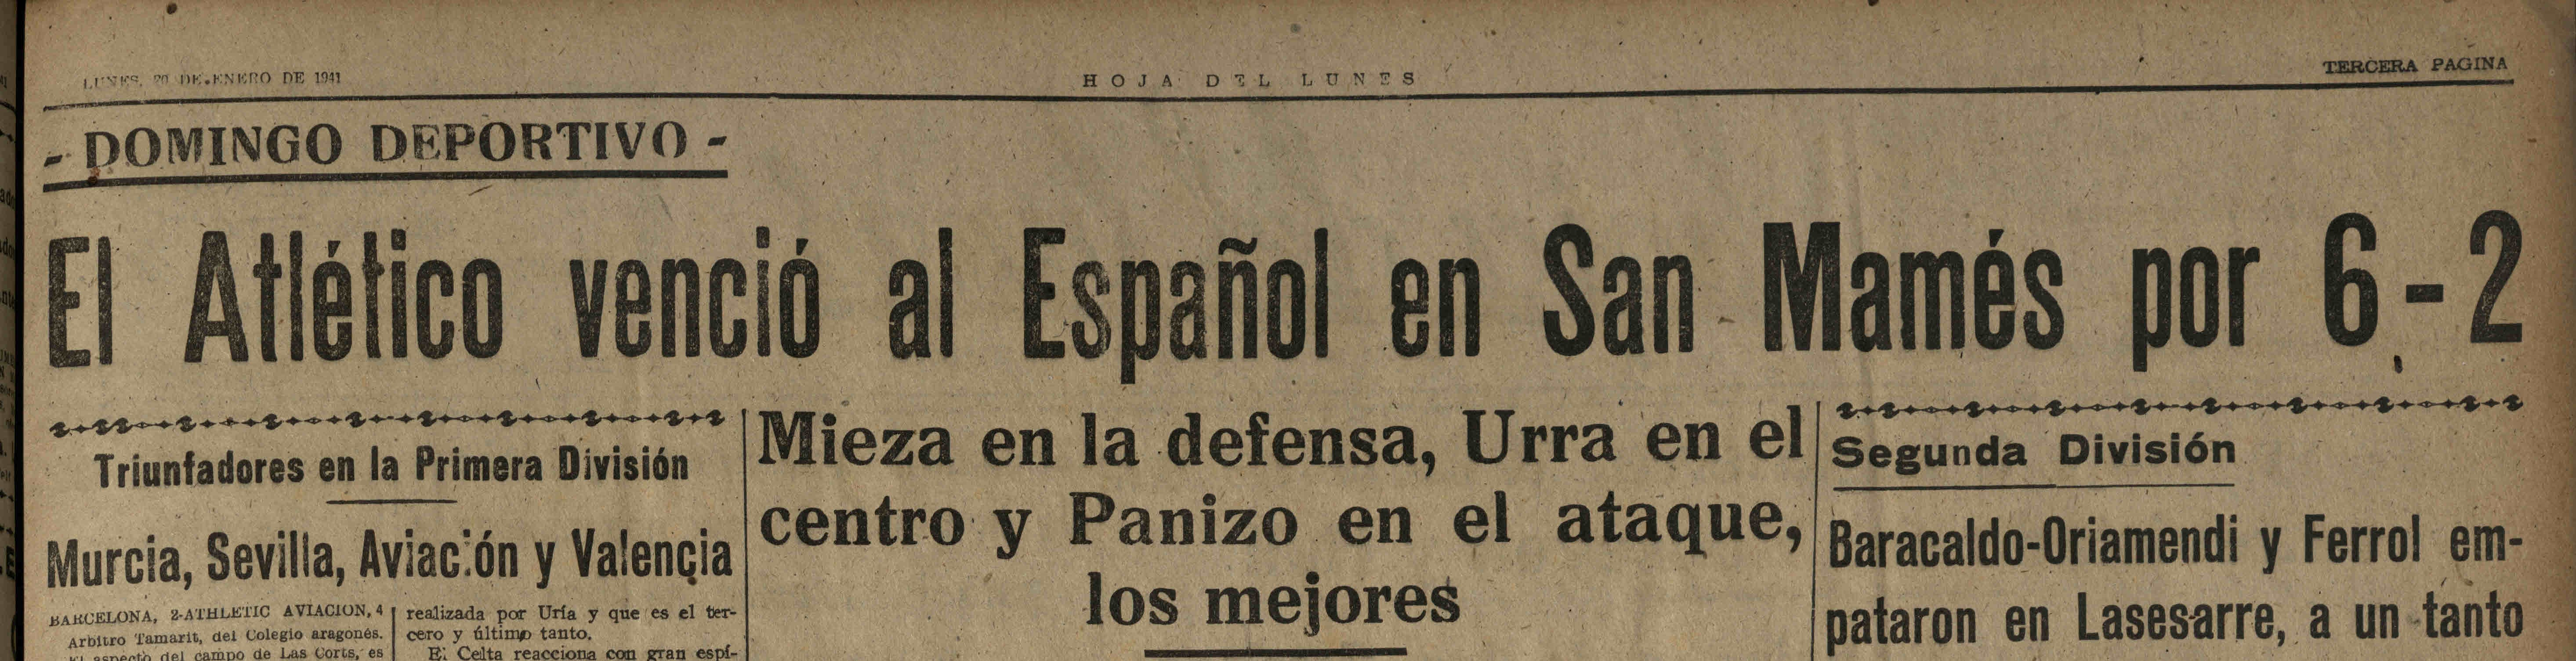 1941-01-20 - Hoja Oficial del Lunes, Bilbao